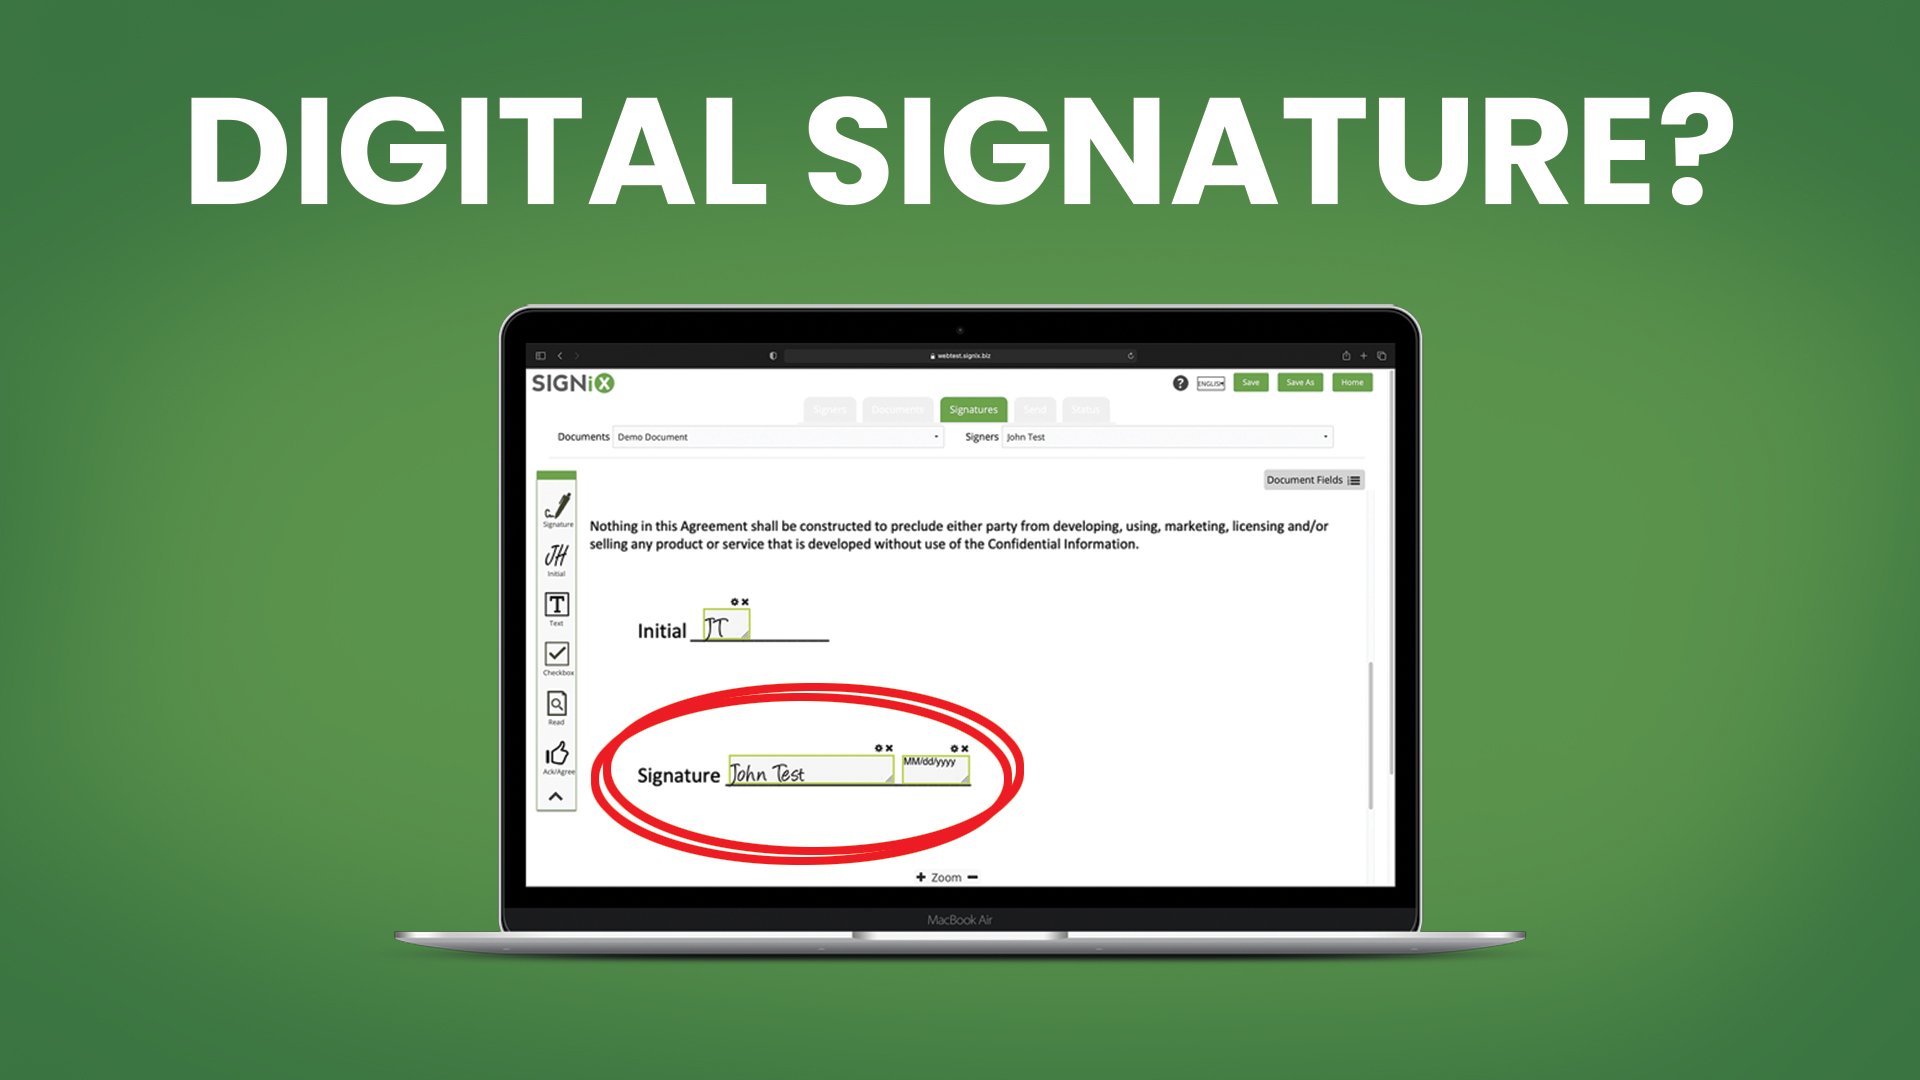 is a Digital Signature?